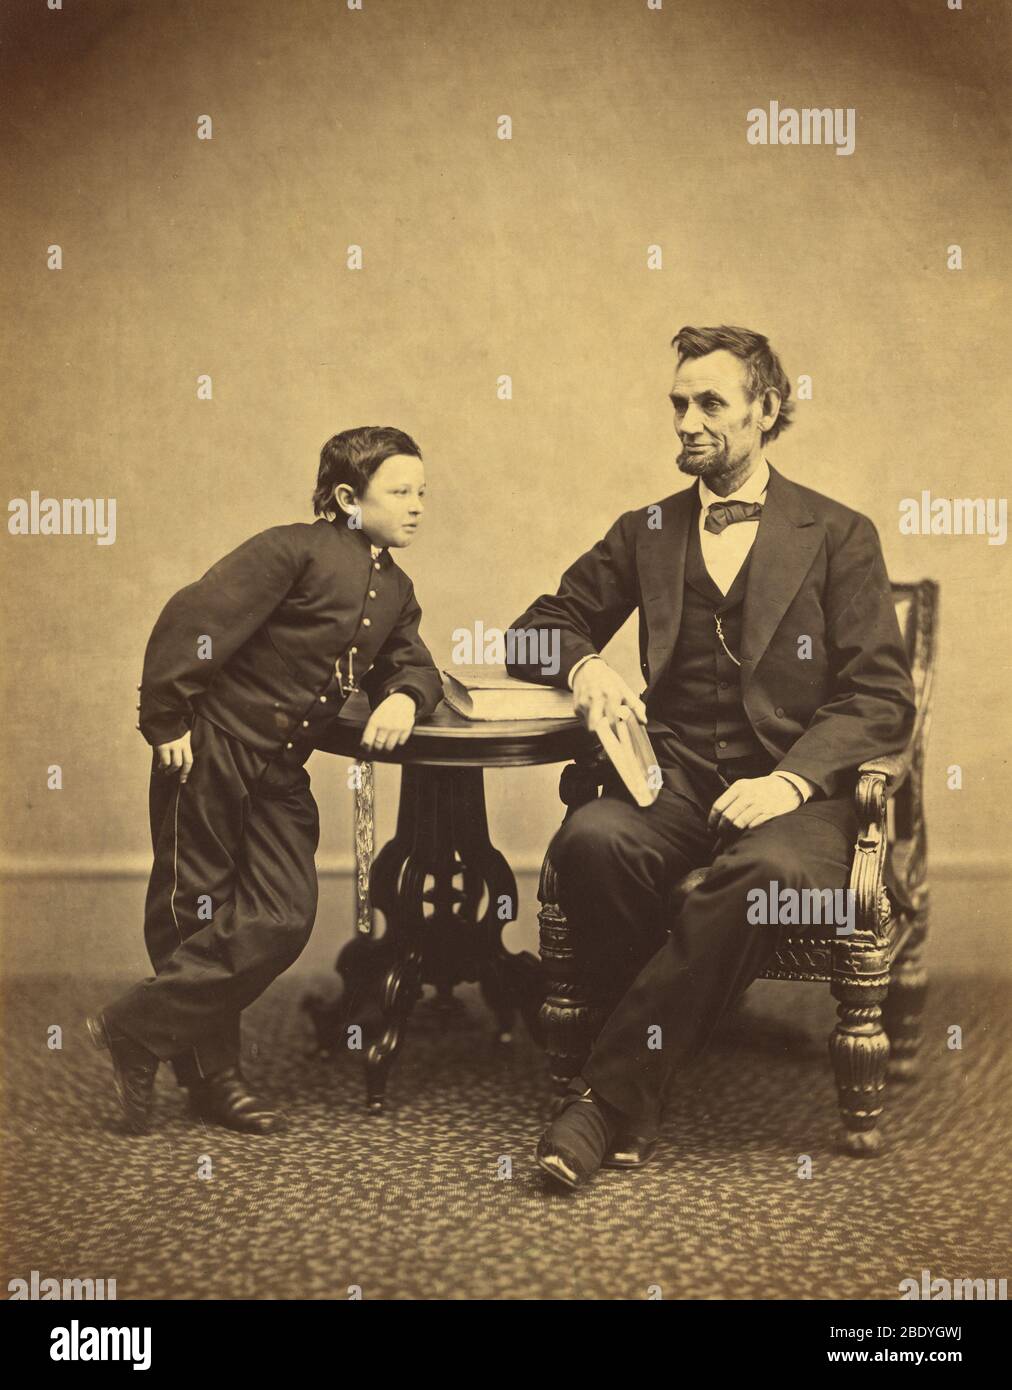 Presidente Abraham Lincoln con son Tad, 1865 Foto de stock